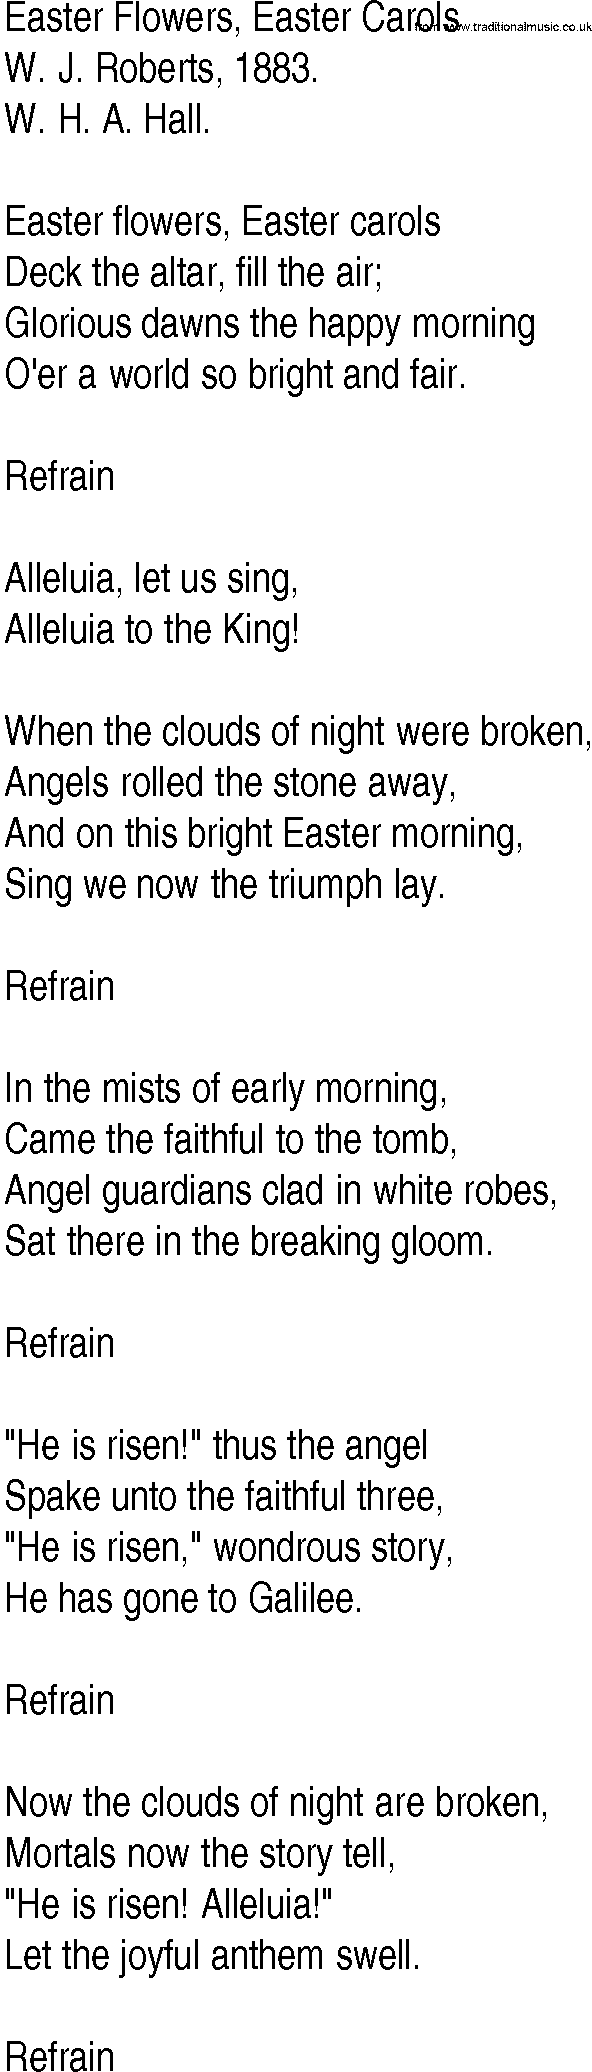 Hymn and Gospel Song: Easter Flowers, Easter Carols by W J Roberts lyrics